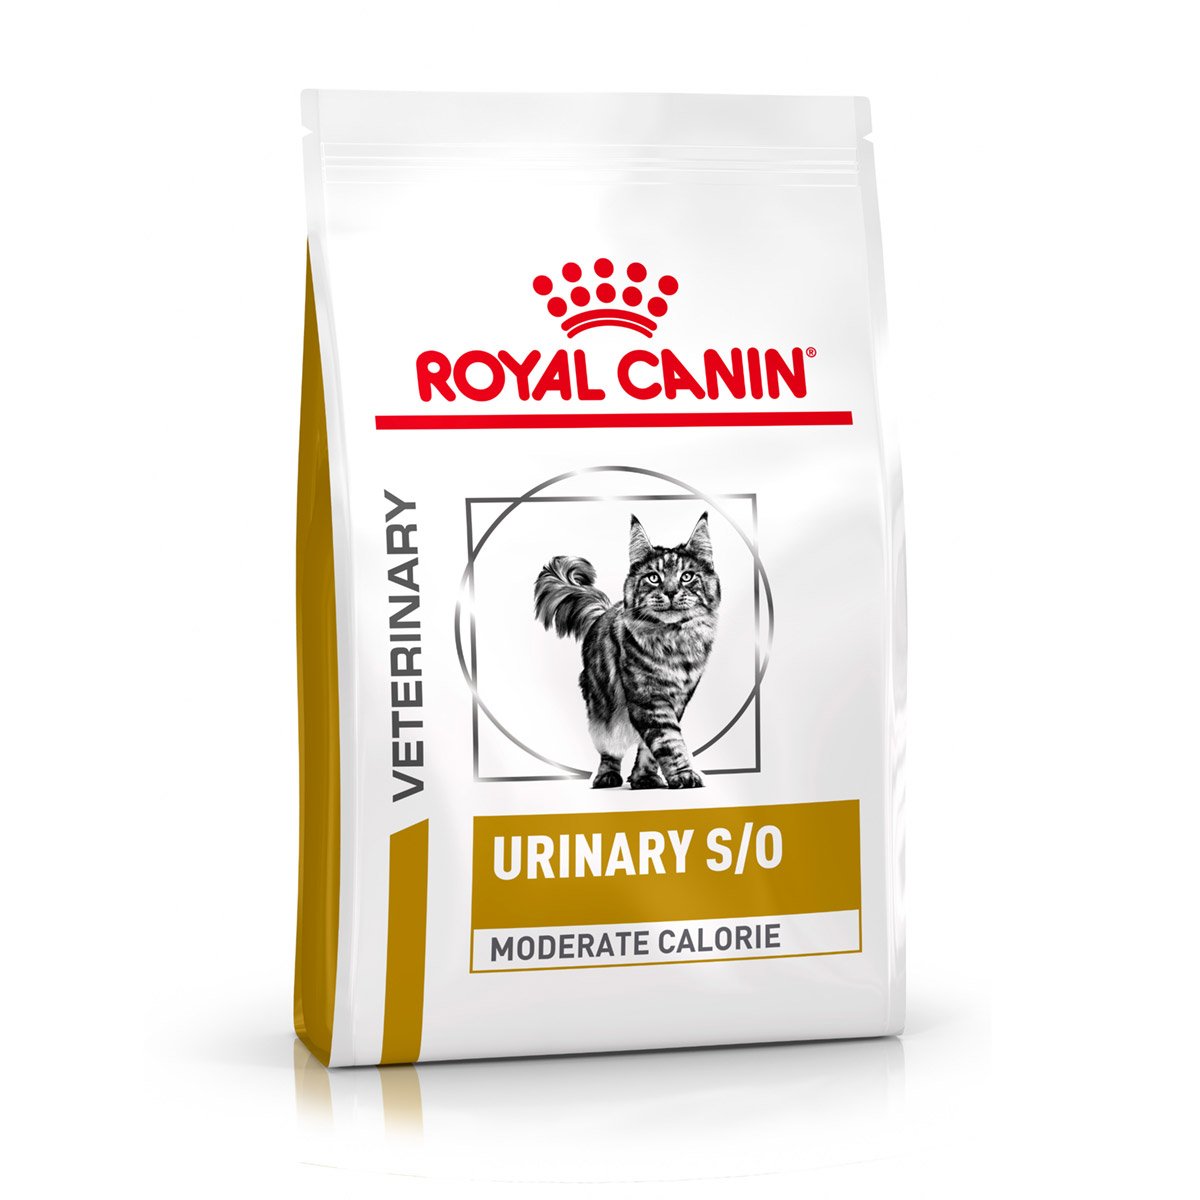 ROYAL CANIN® Veterinary URINARY S/O MODERATE CALORIE Trockenfutter für Katzen 9kg von Royal Canin